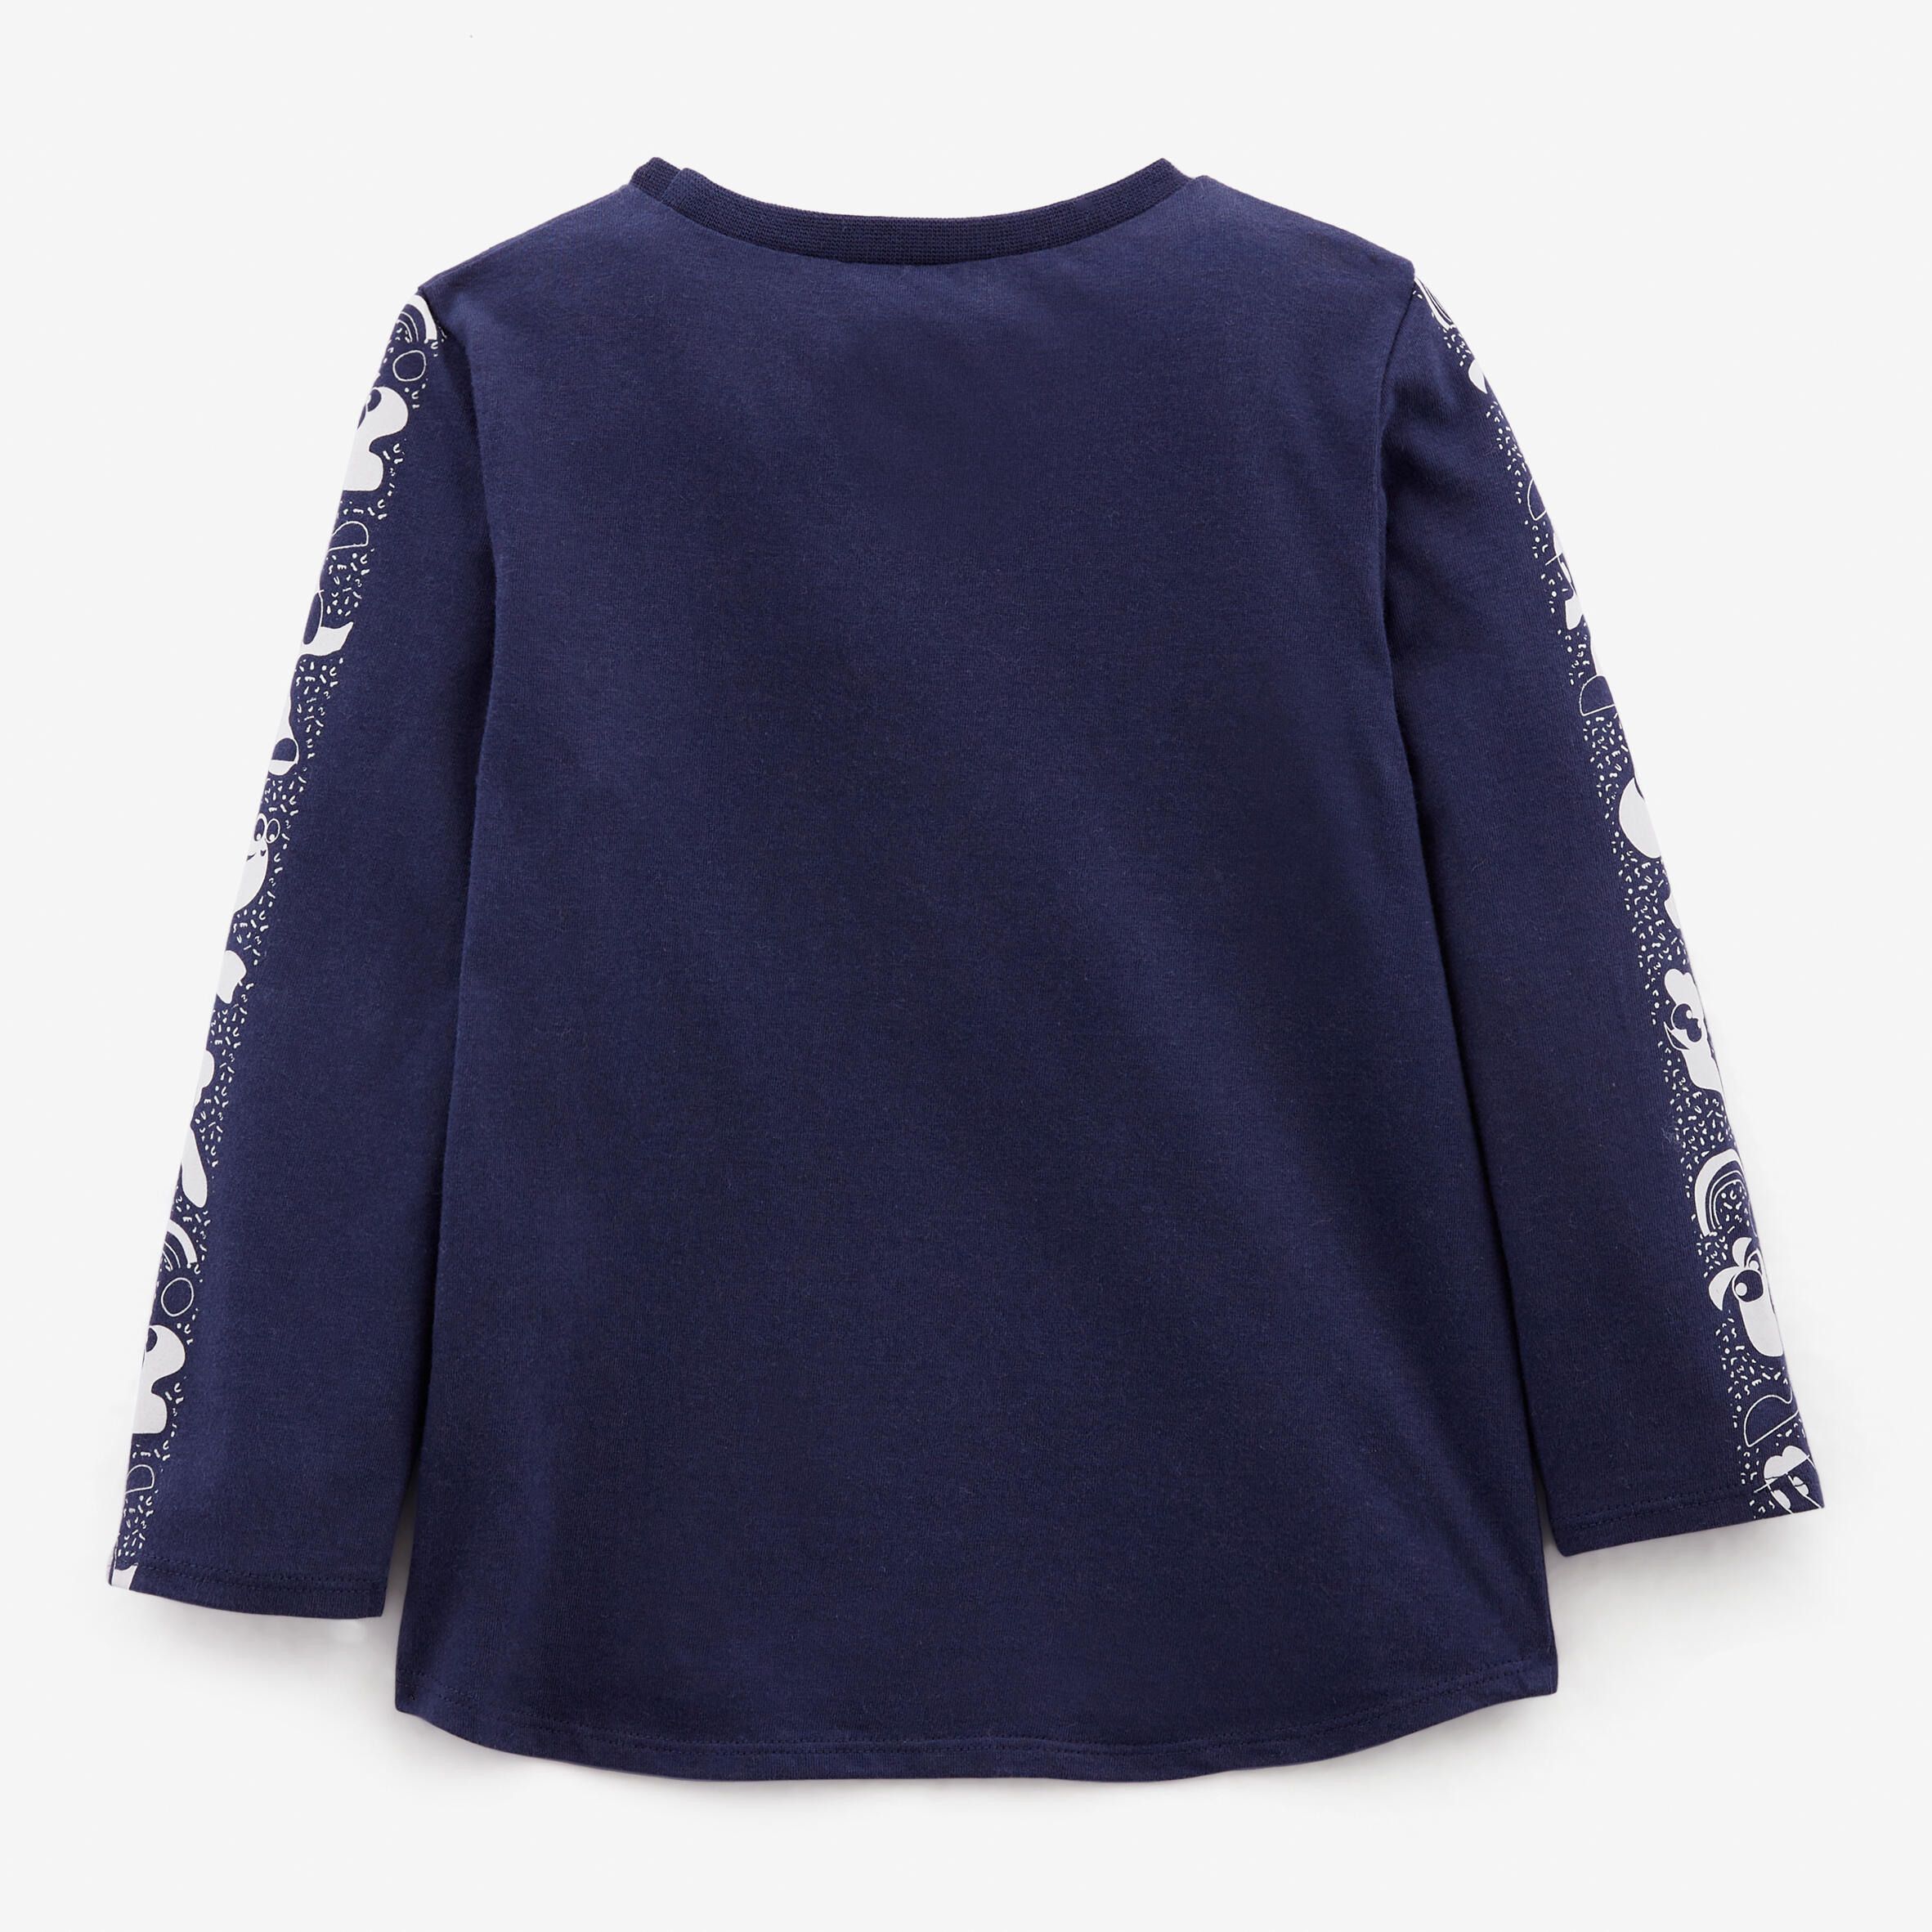 Kids' Baby Gym Long-Sleeved T-Shirt - Navy Blue 3/4